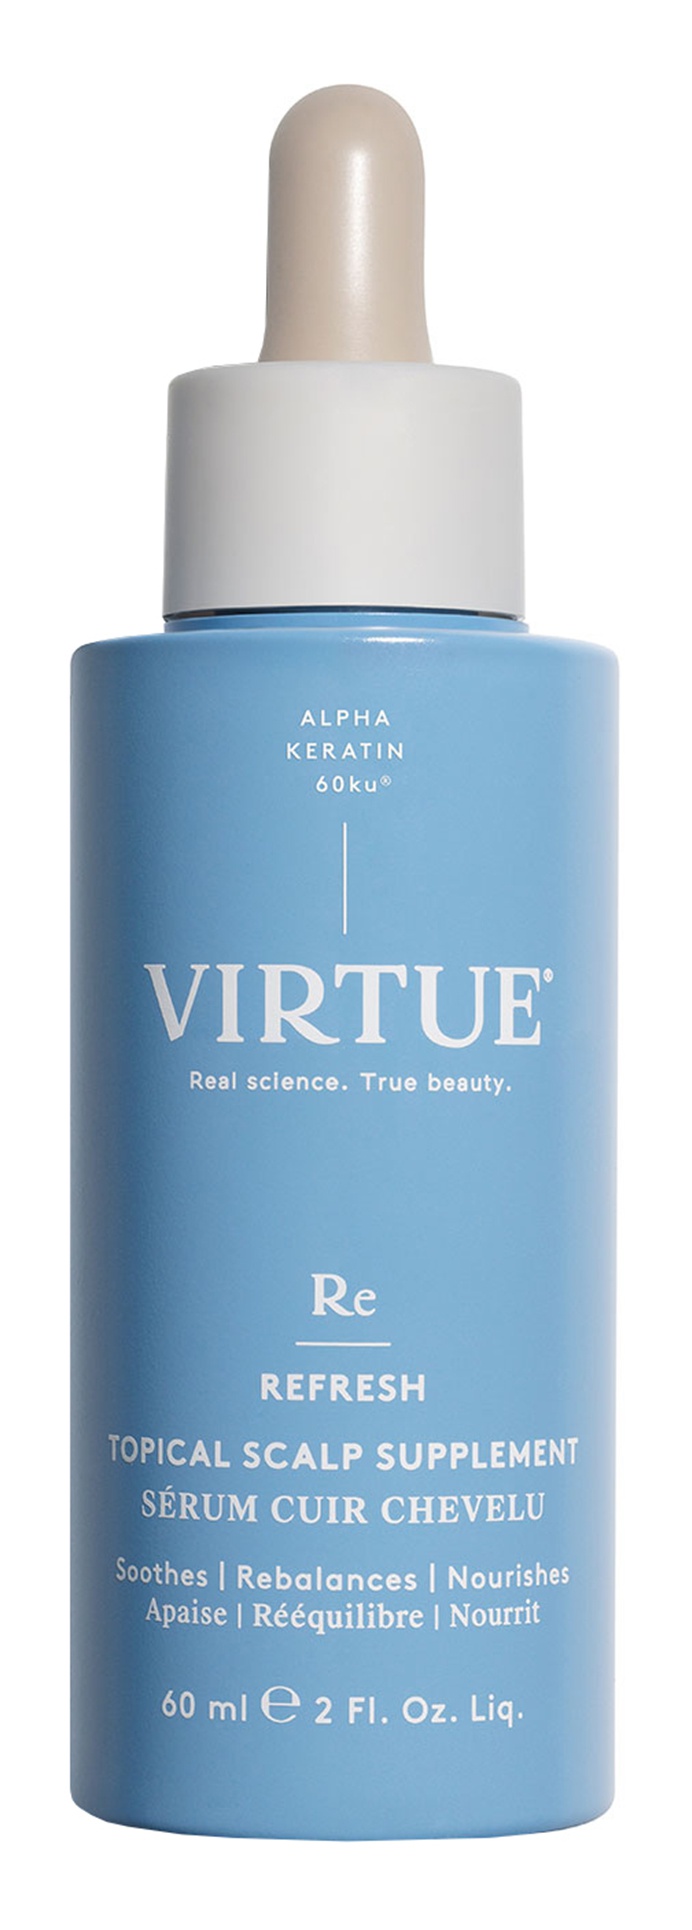 virtue Topical Scalp Supplement